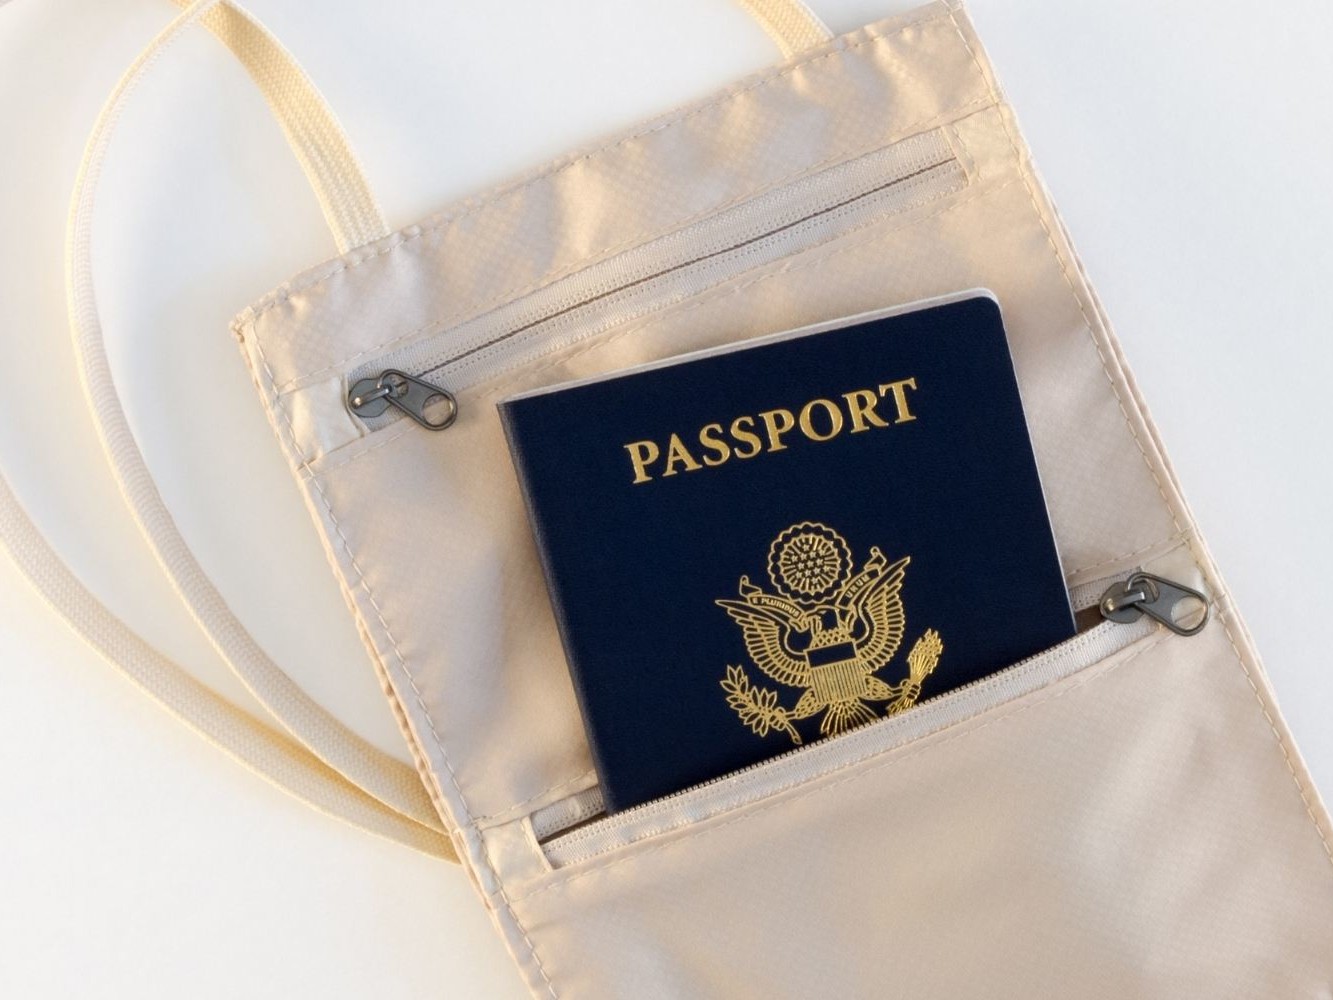 Pochette secrète avec passeport